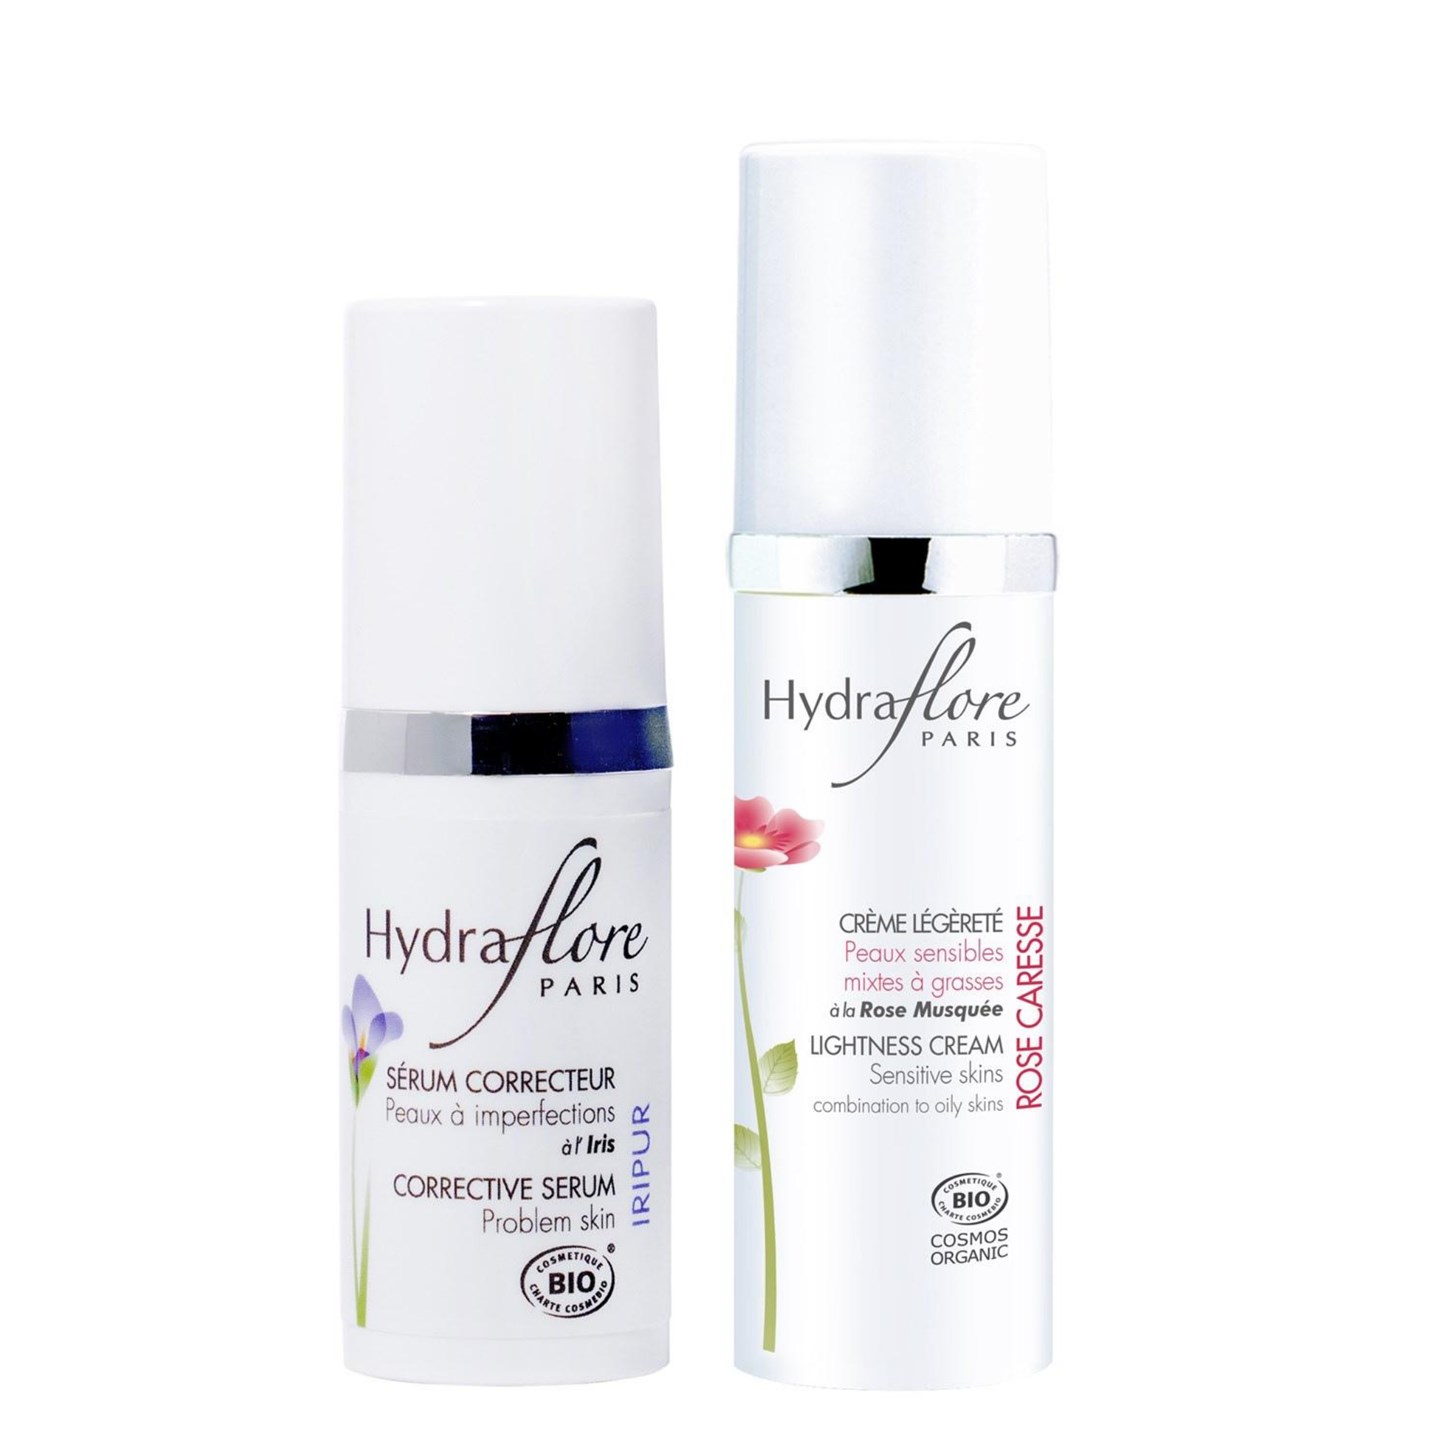 Hydraflore Corrective Serum and Soothing Lightness Cream Duo